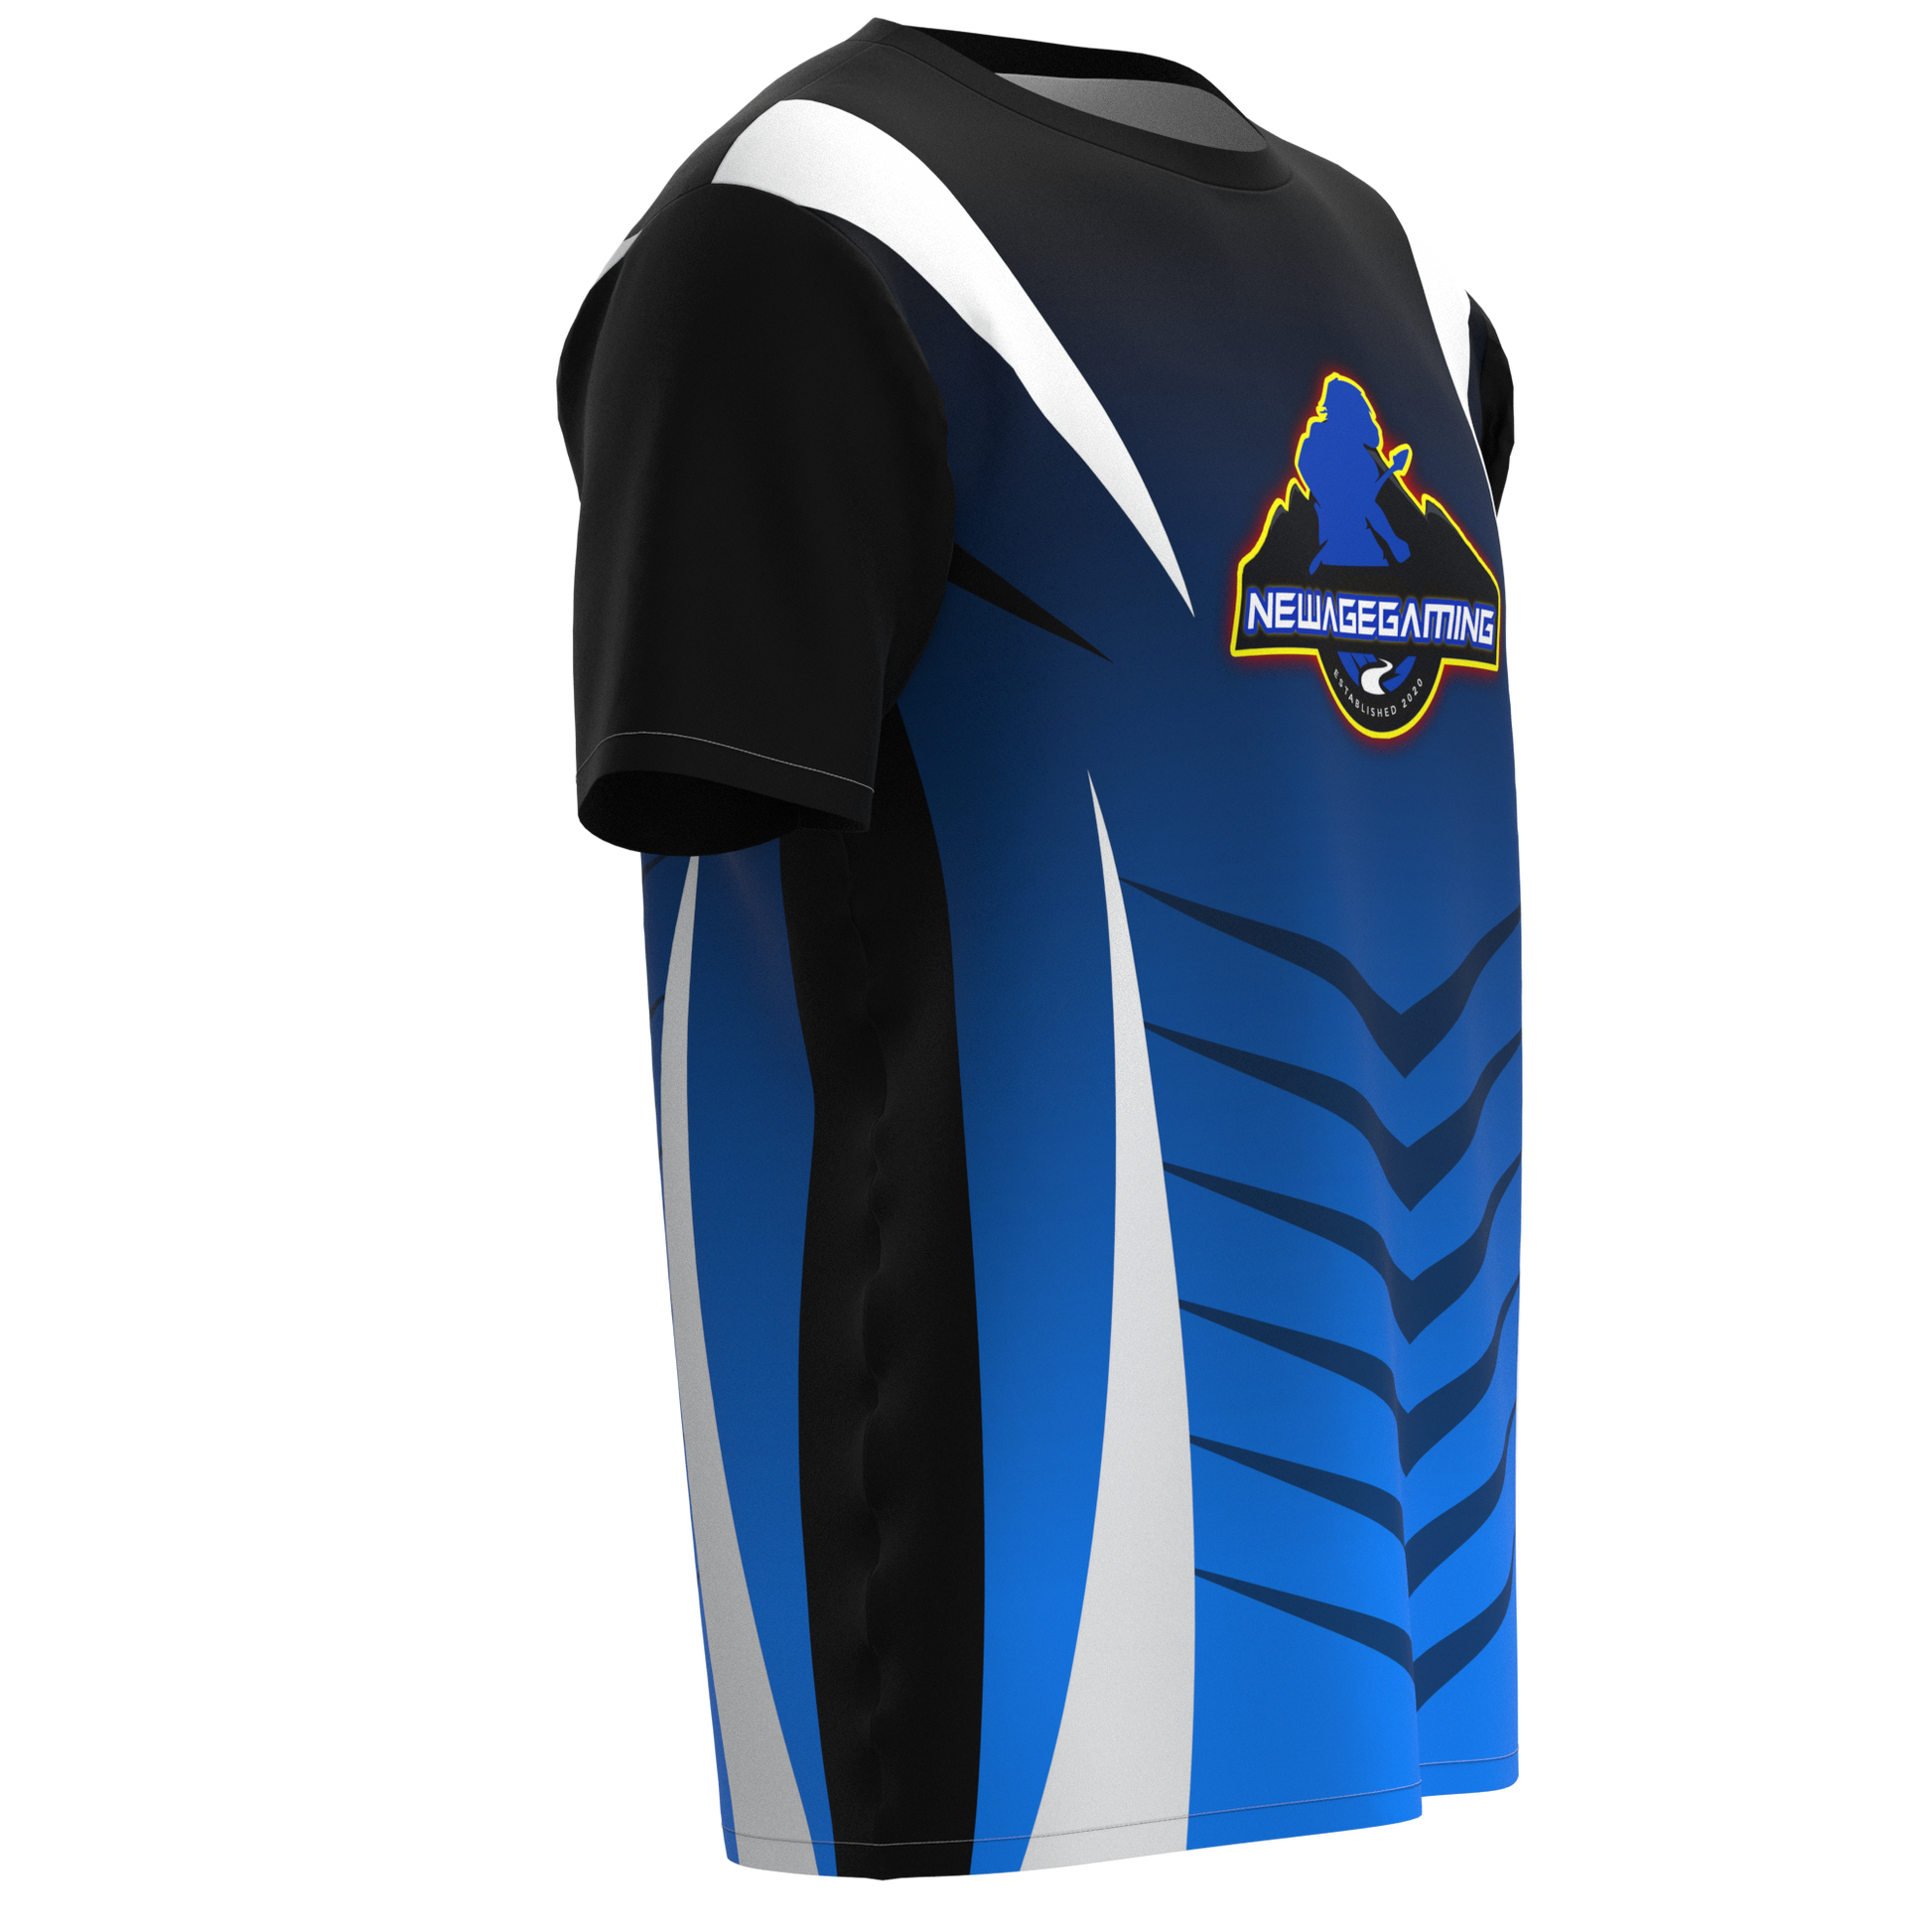 Unisex Half sleeves New Custom Design Football Jersey - Black